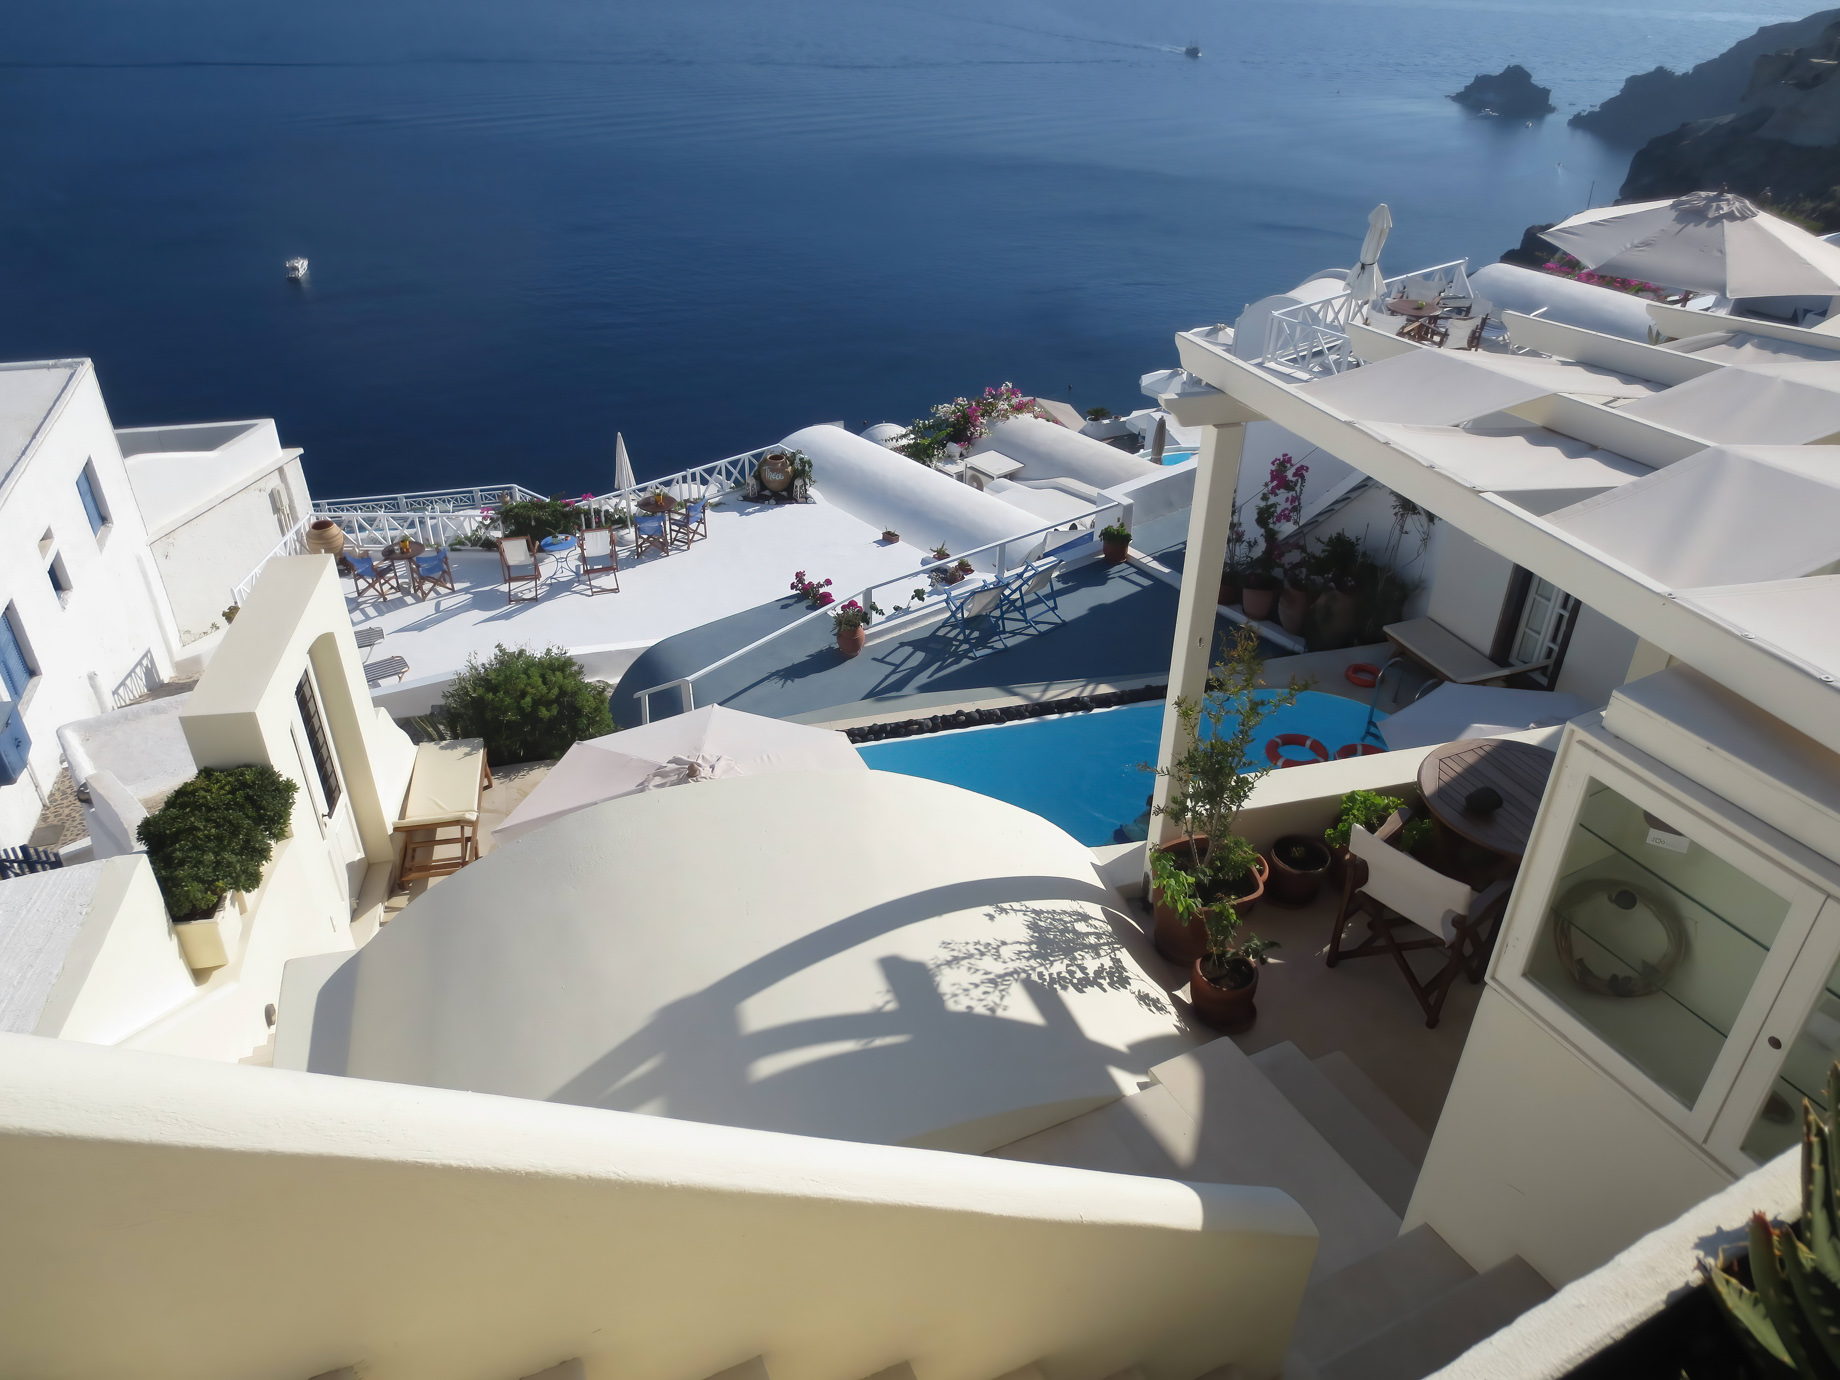 Mystique Hotel Santorini – Oia, Santorini Island, Greece – Mystique Ocean View Terraced Decks